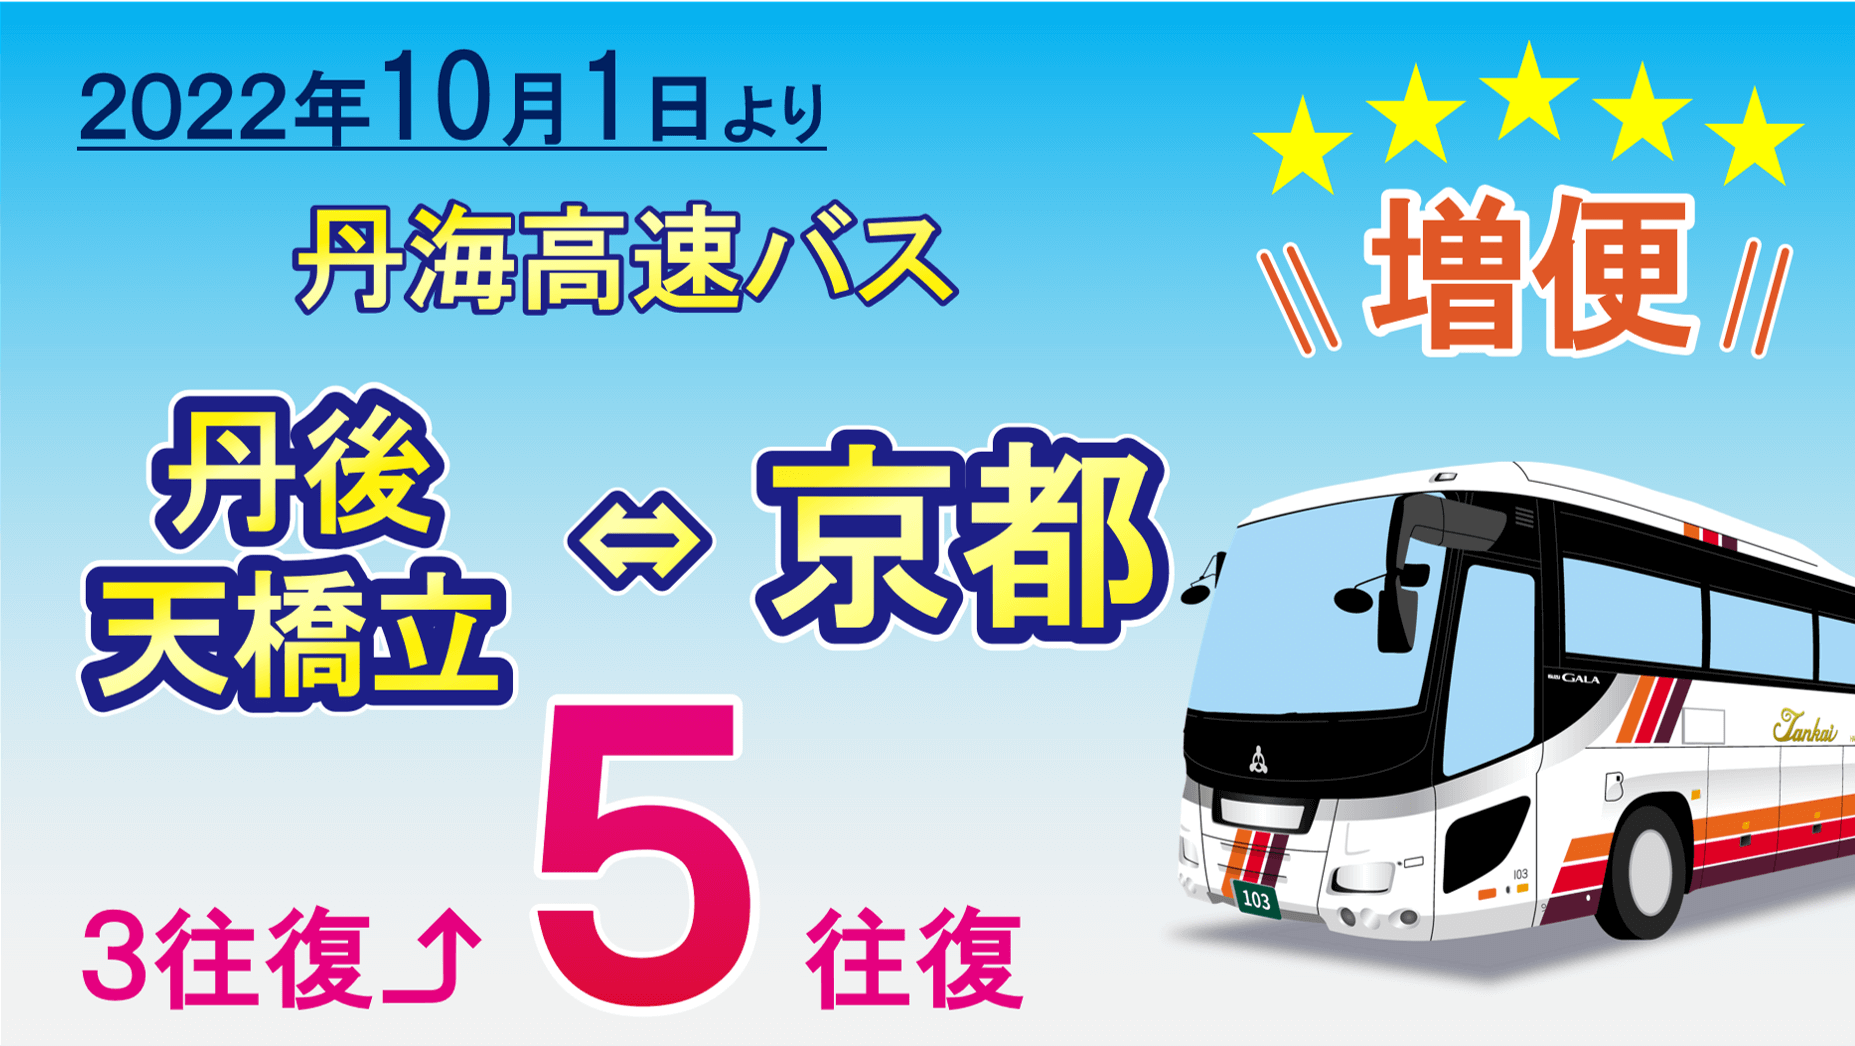 top-image-bus